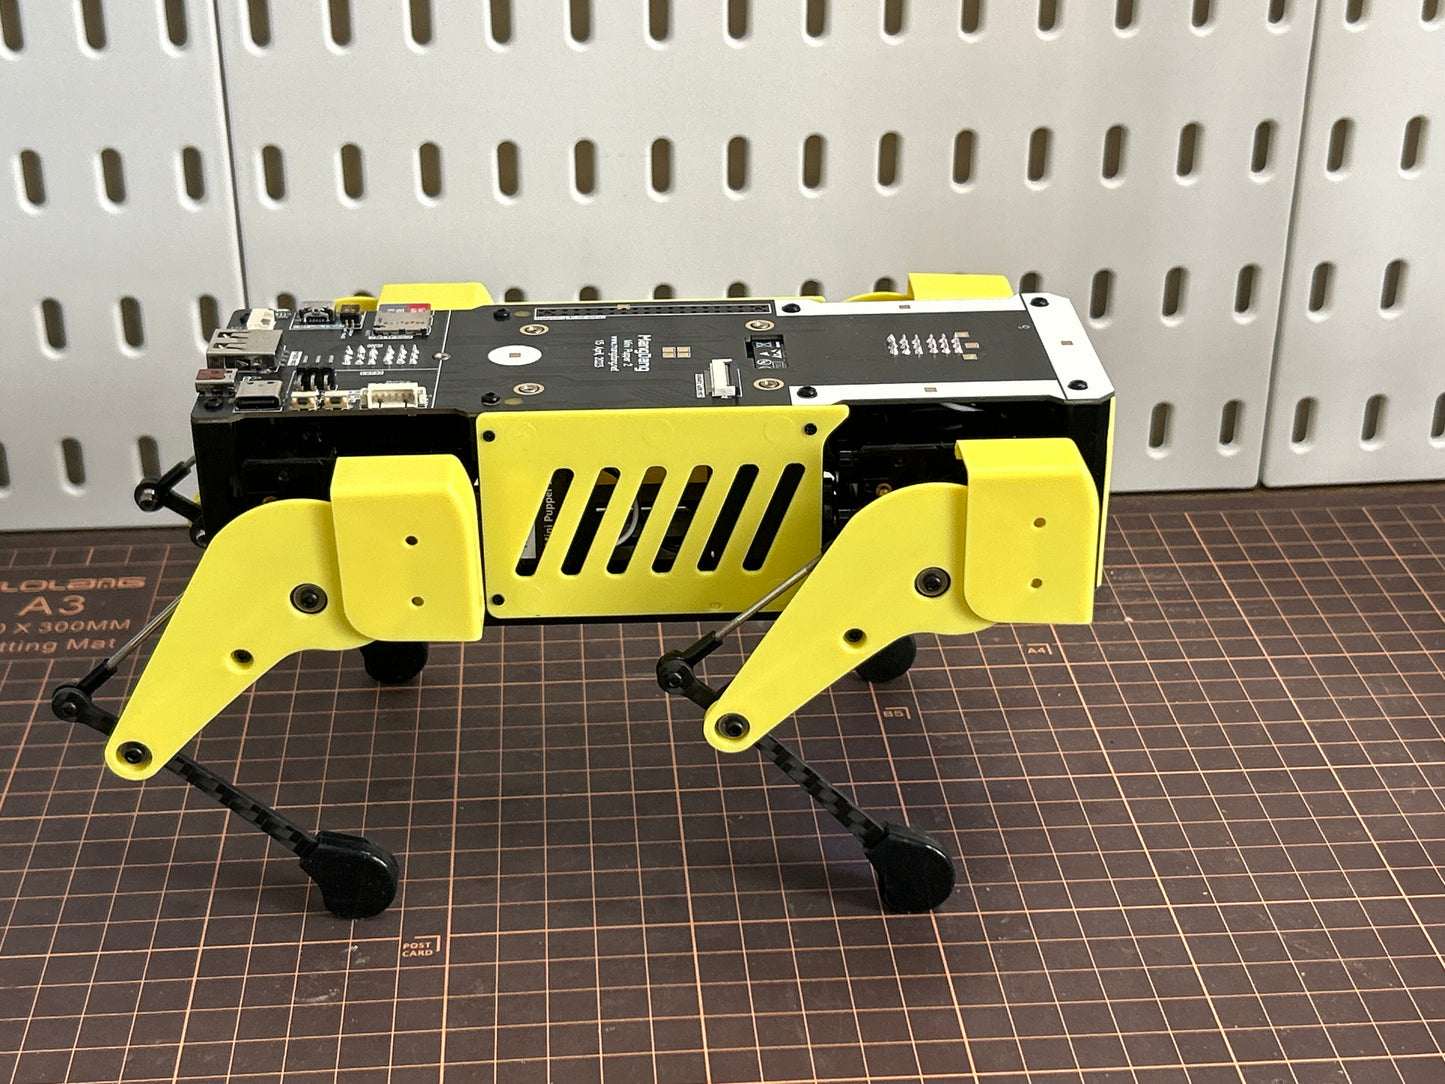 Mini Pupper 2: AI Robot, Smart Robot, Quadruped Robot, Educational Robot, Genuine, Open-Source, STEM, K12